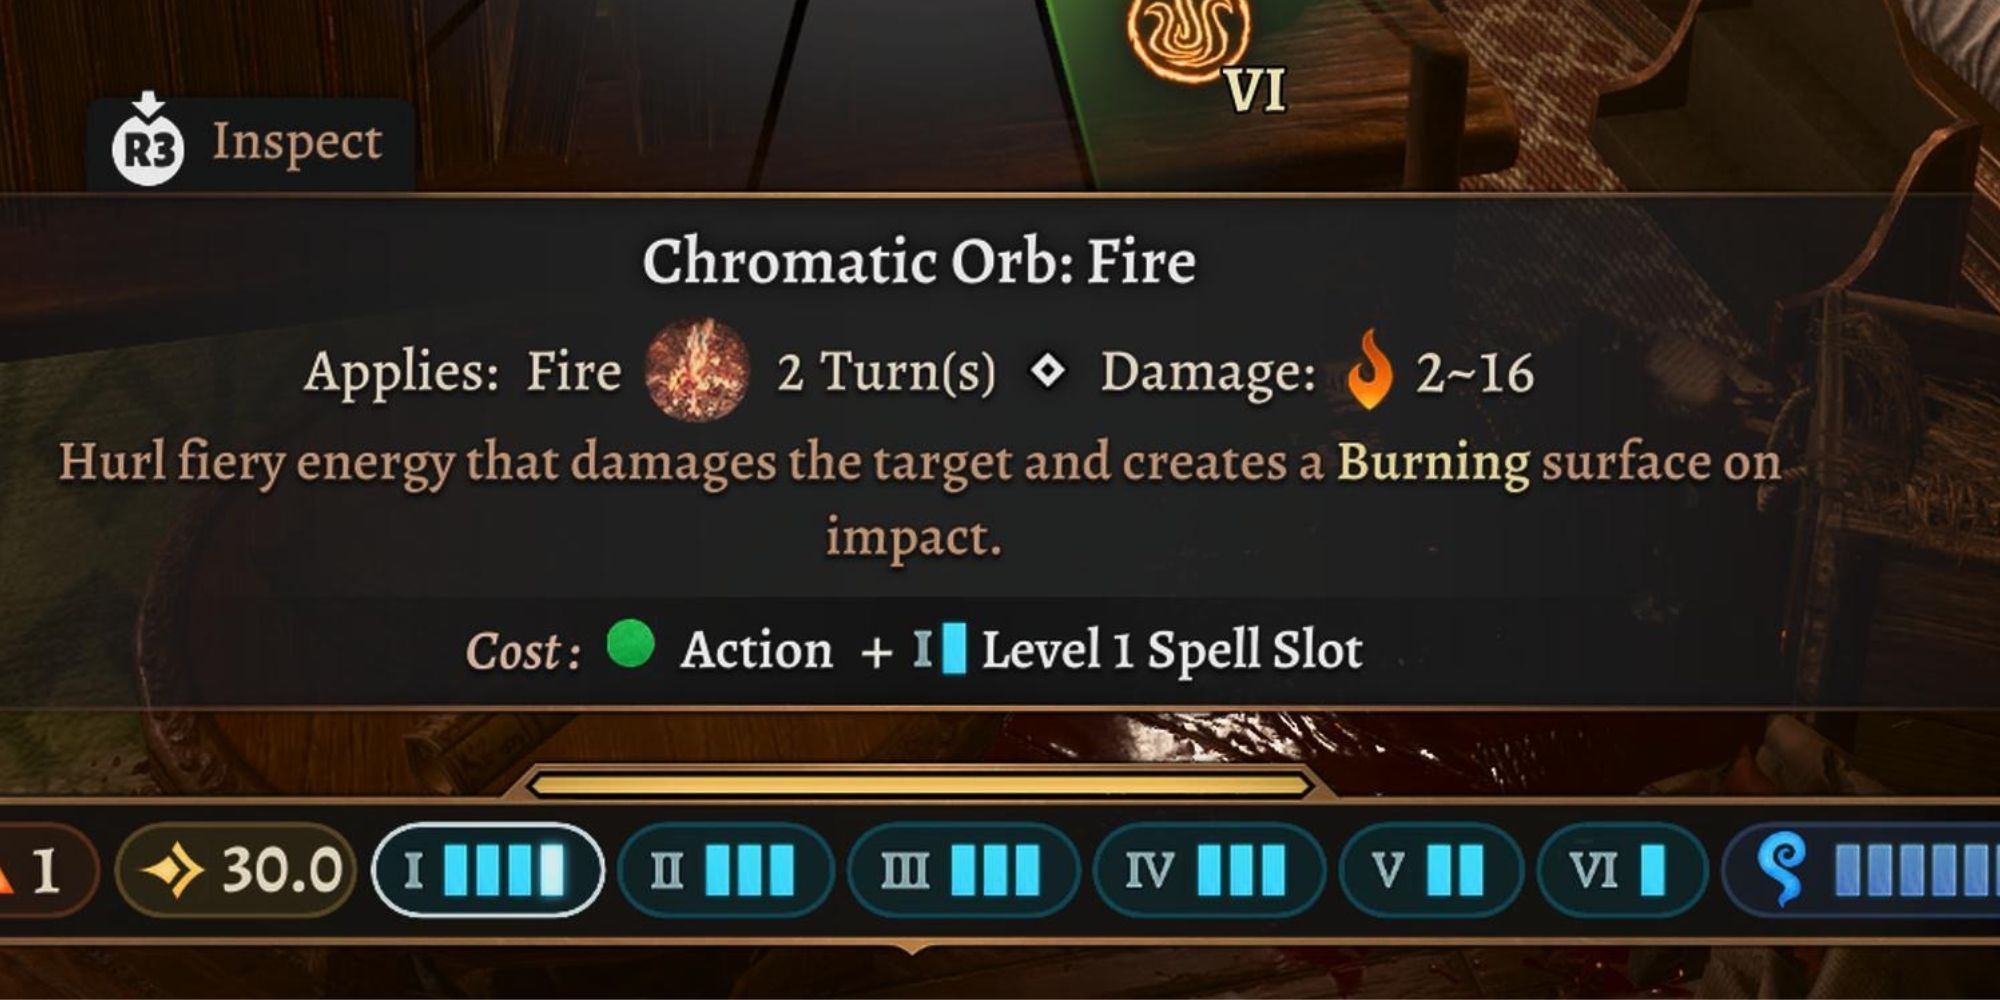 Chromatic Orb of Fire in Baldur's Gate 3